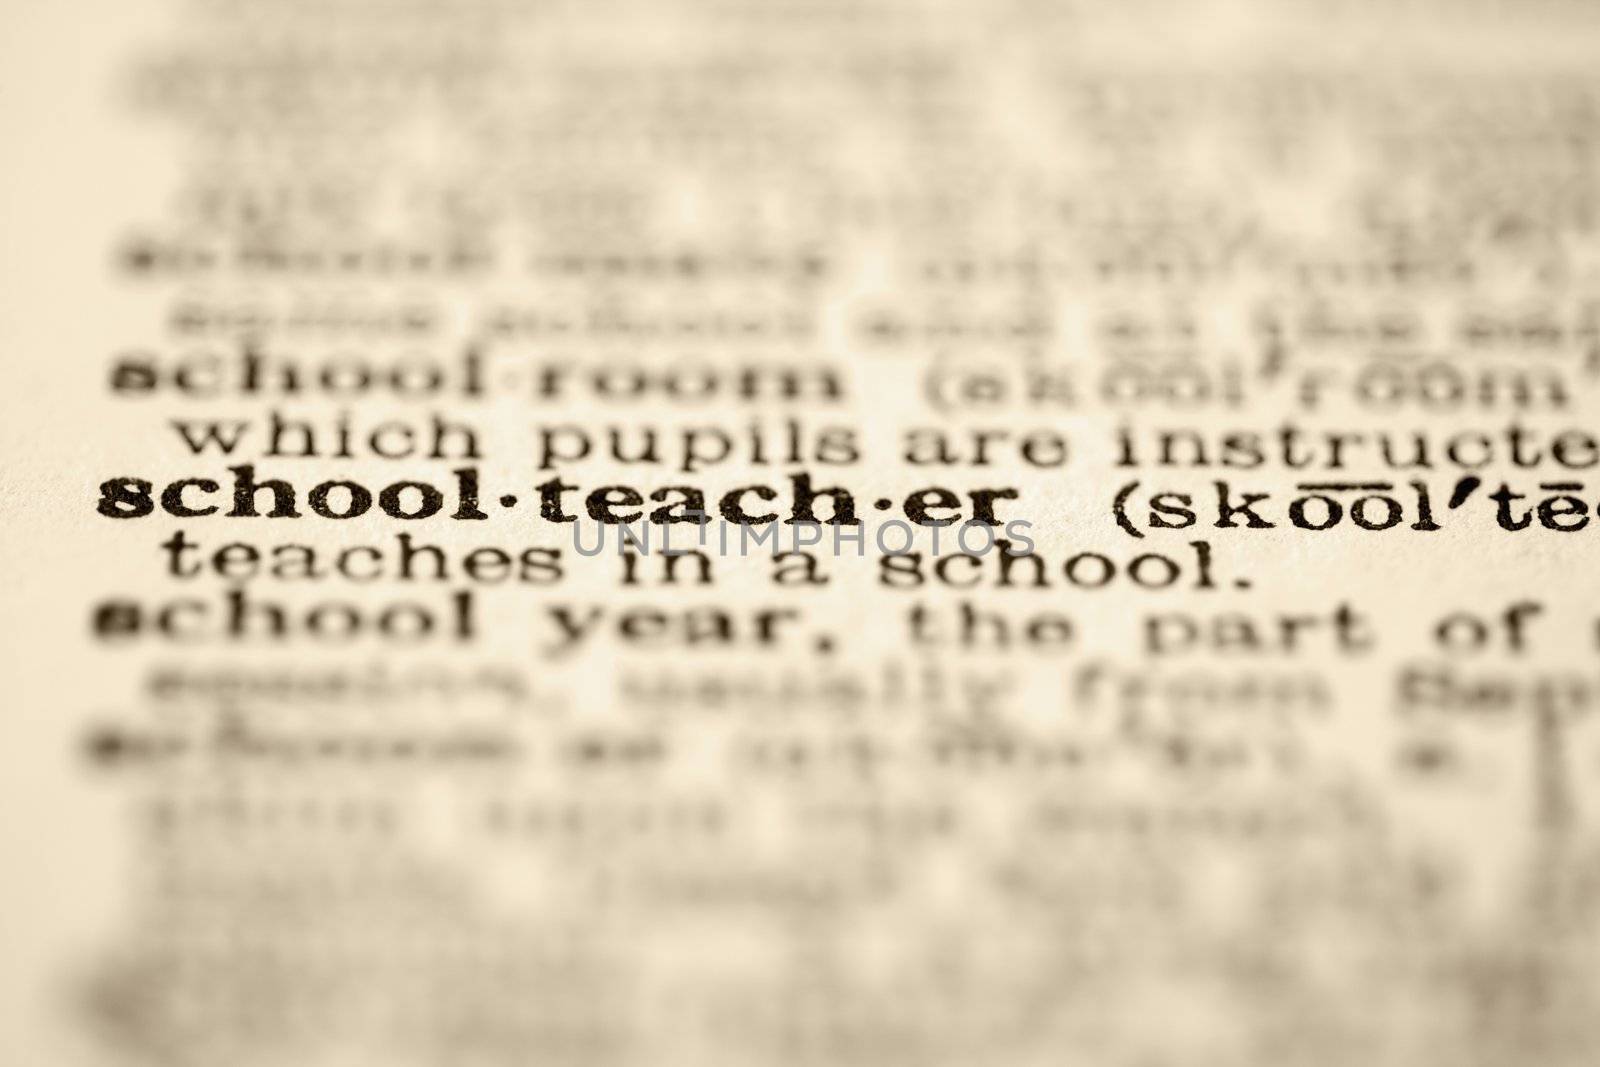 School teacher definition. by iofoto